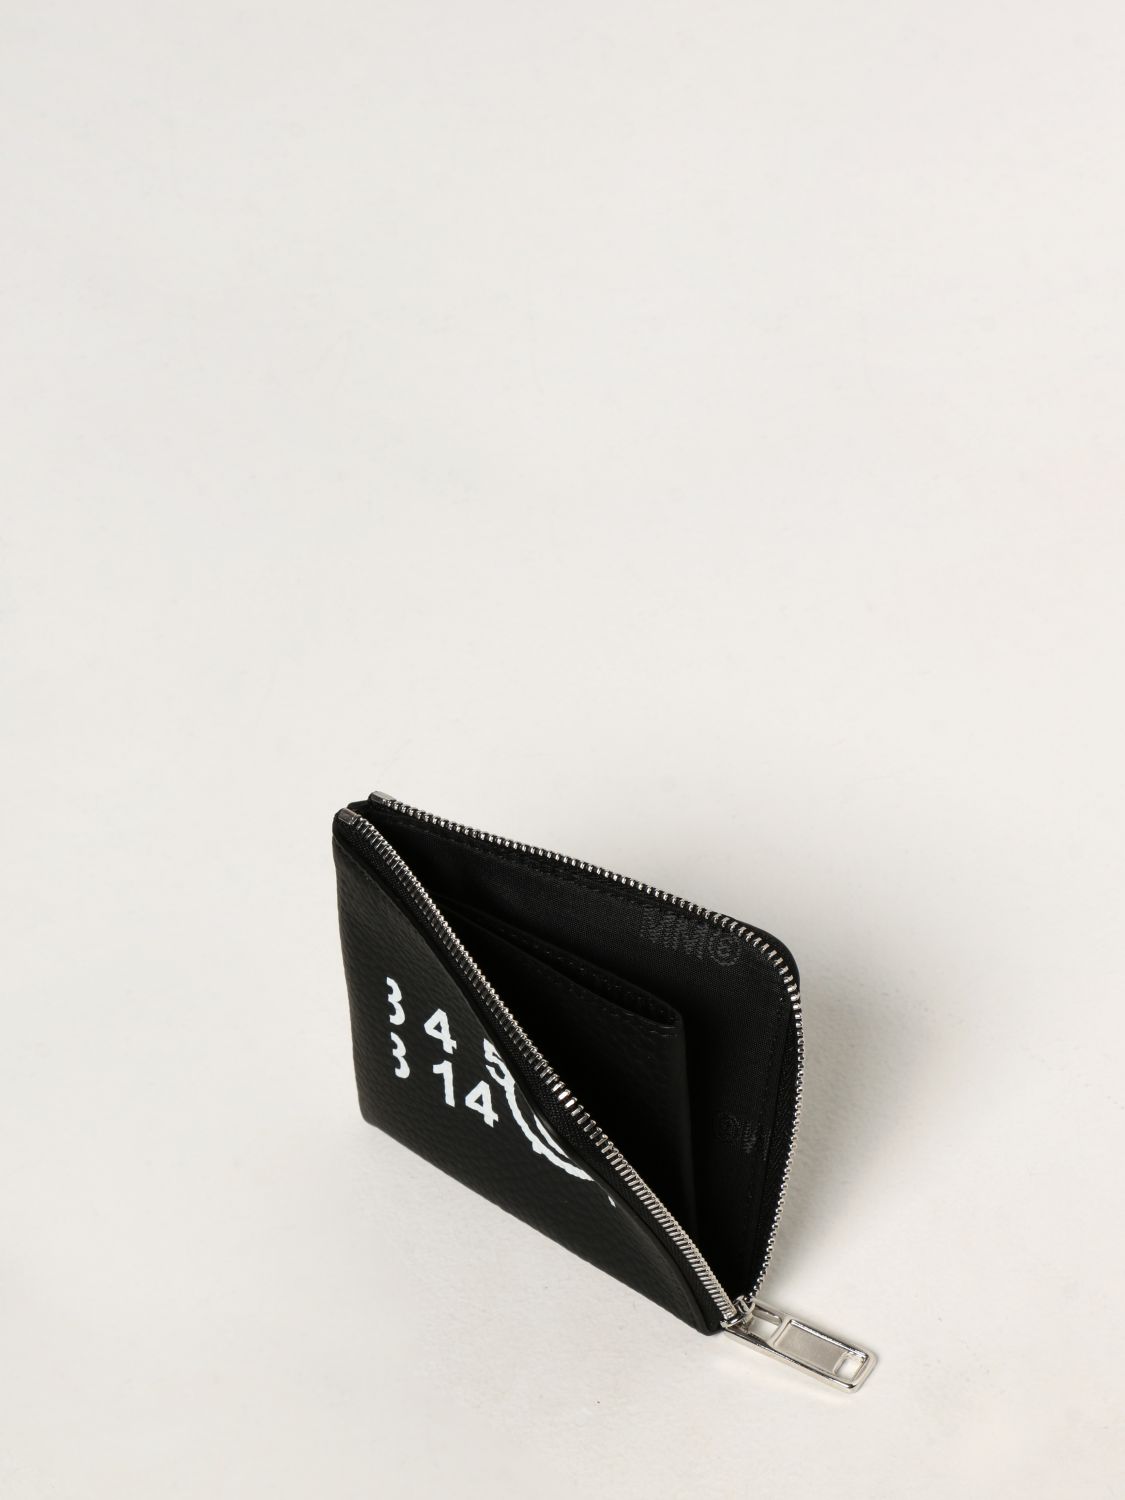 MM6 MAISON MARGIELA: 財布 レディース - ブラック | 財布 Mm6 Maison 